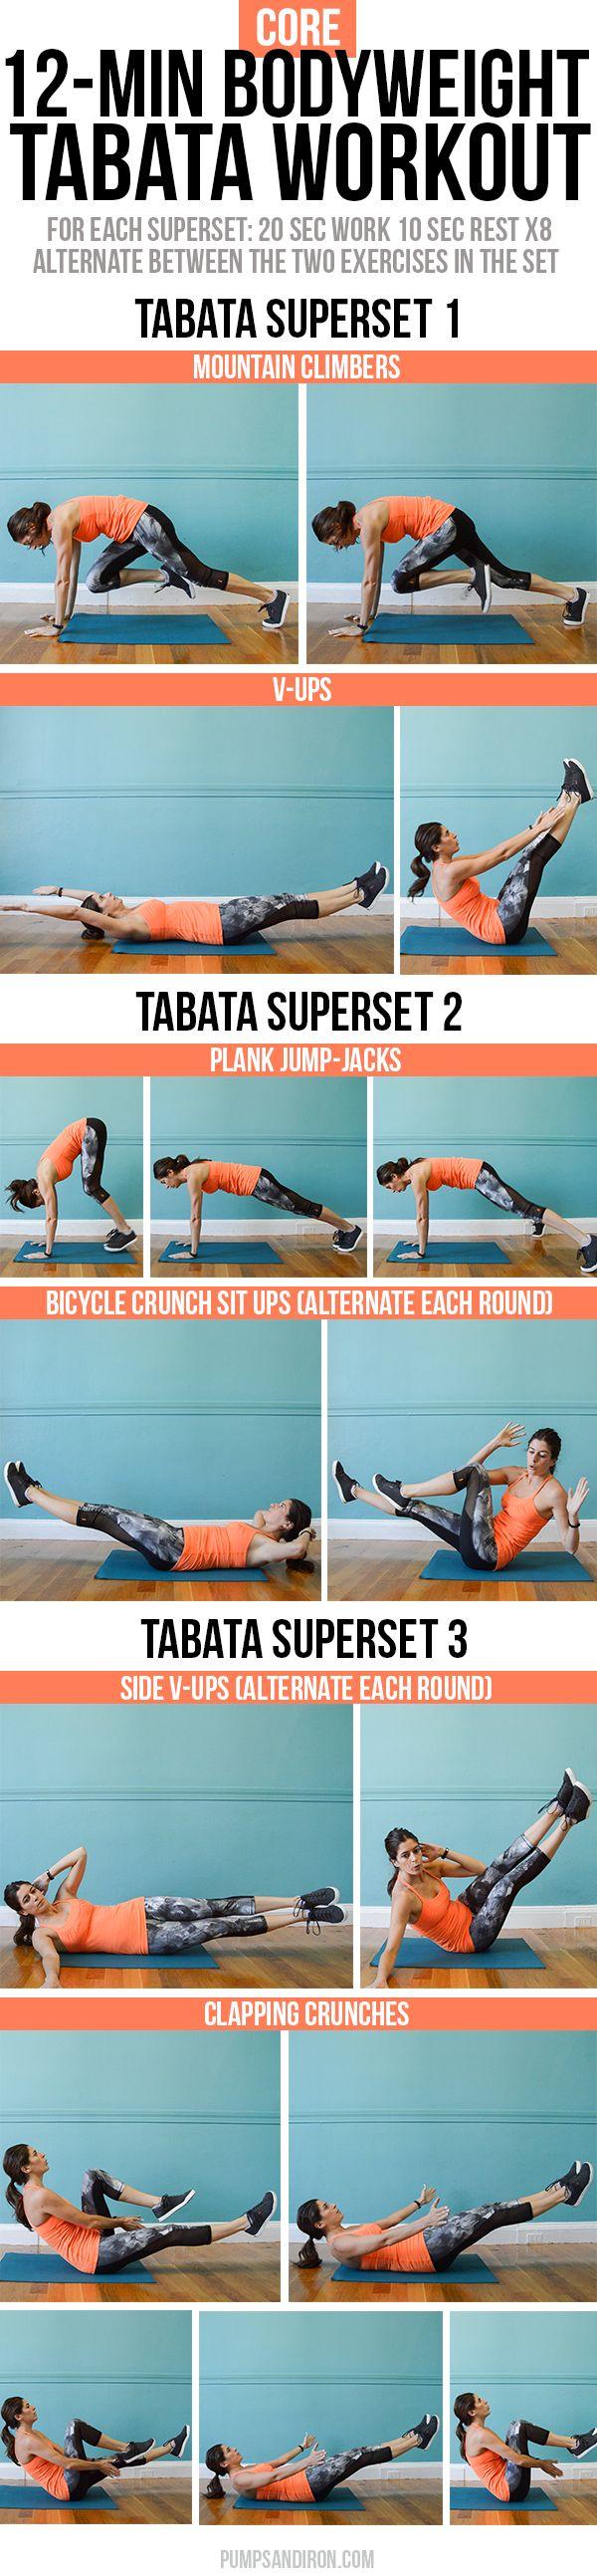 Wedding - 12-Minute Bodyweight Tabata Workout Series: Core